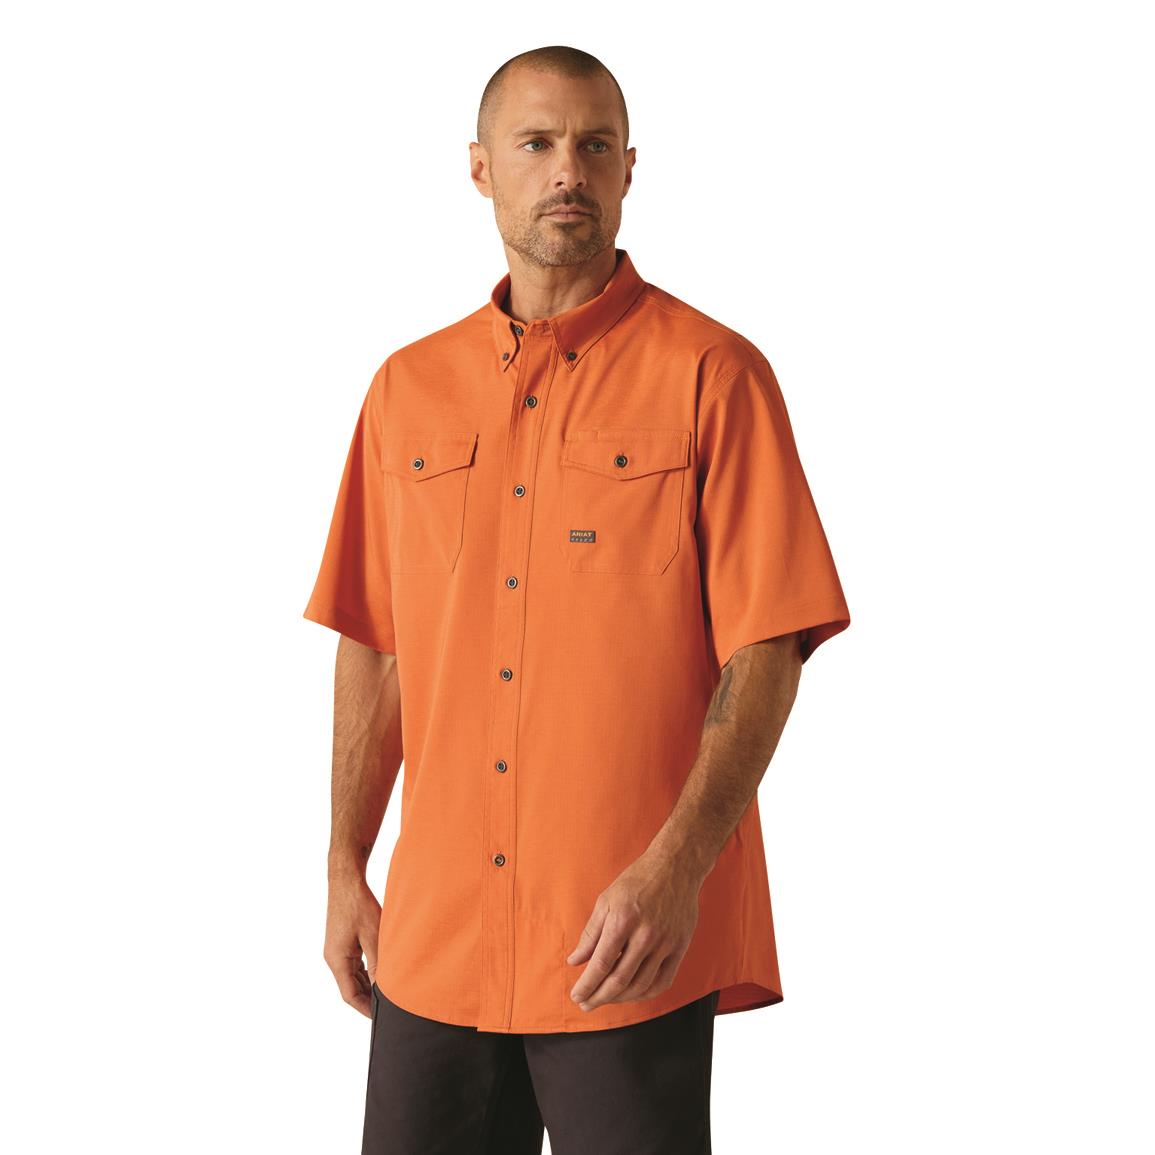 Ariat Men's Rebar Made Tough VentTEK DuraStretch Work Shirt, Orange Rust Heather